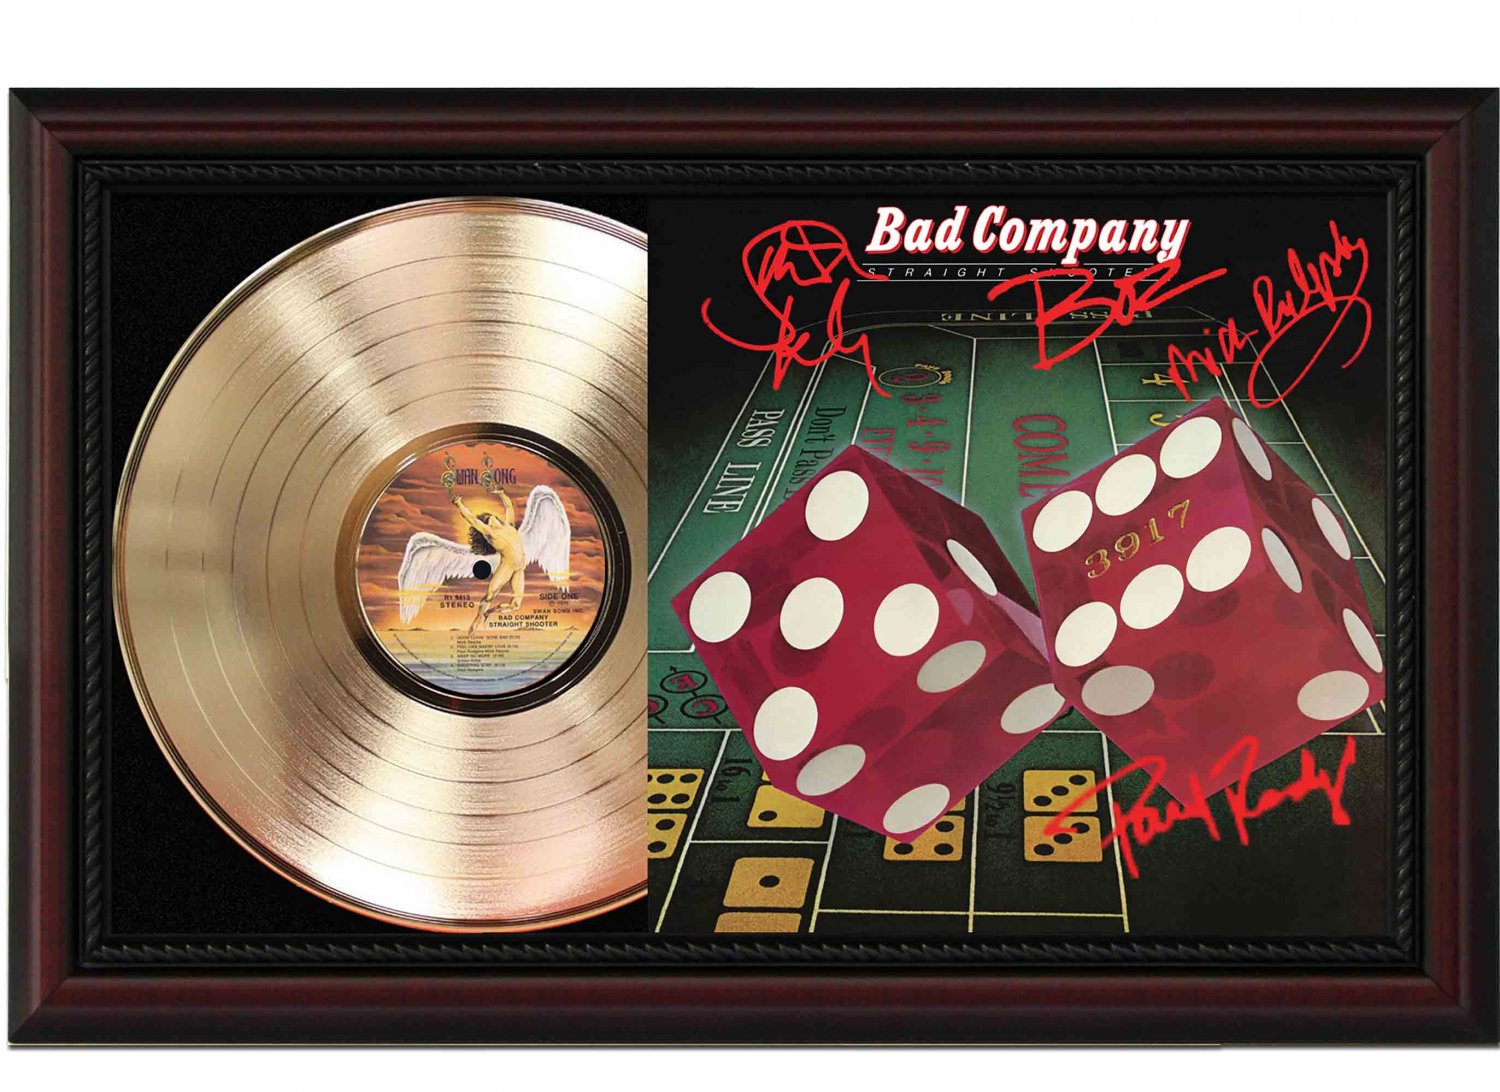 BAD COMPANY "Straight Shooter" Framed Record Display.